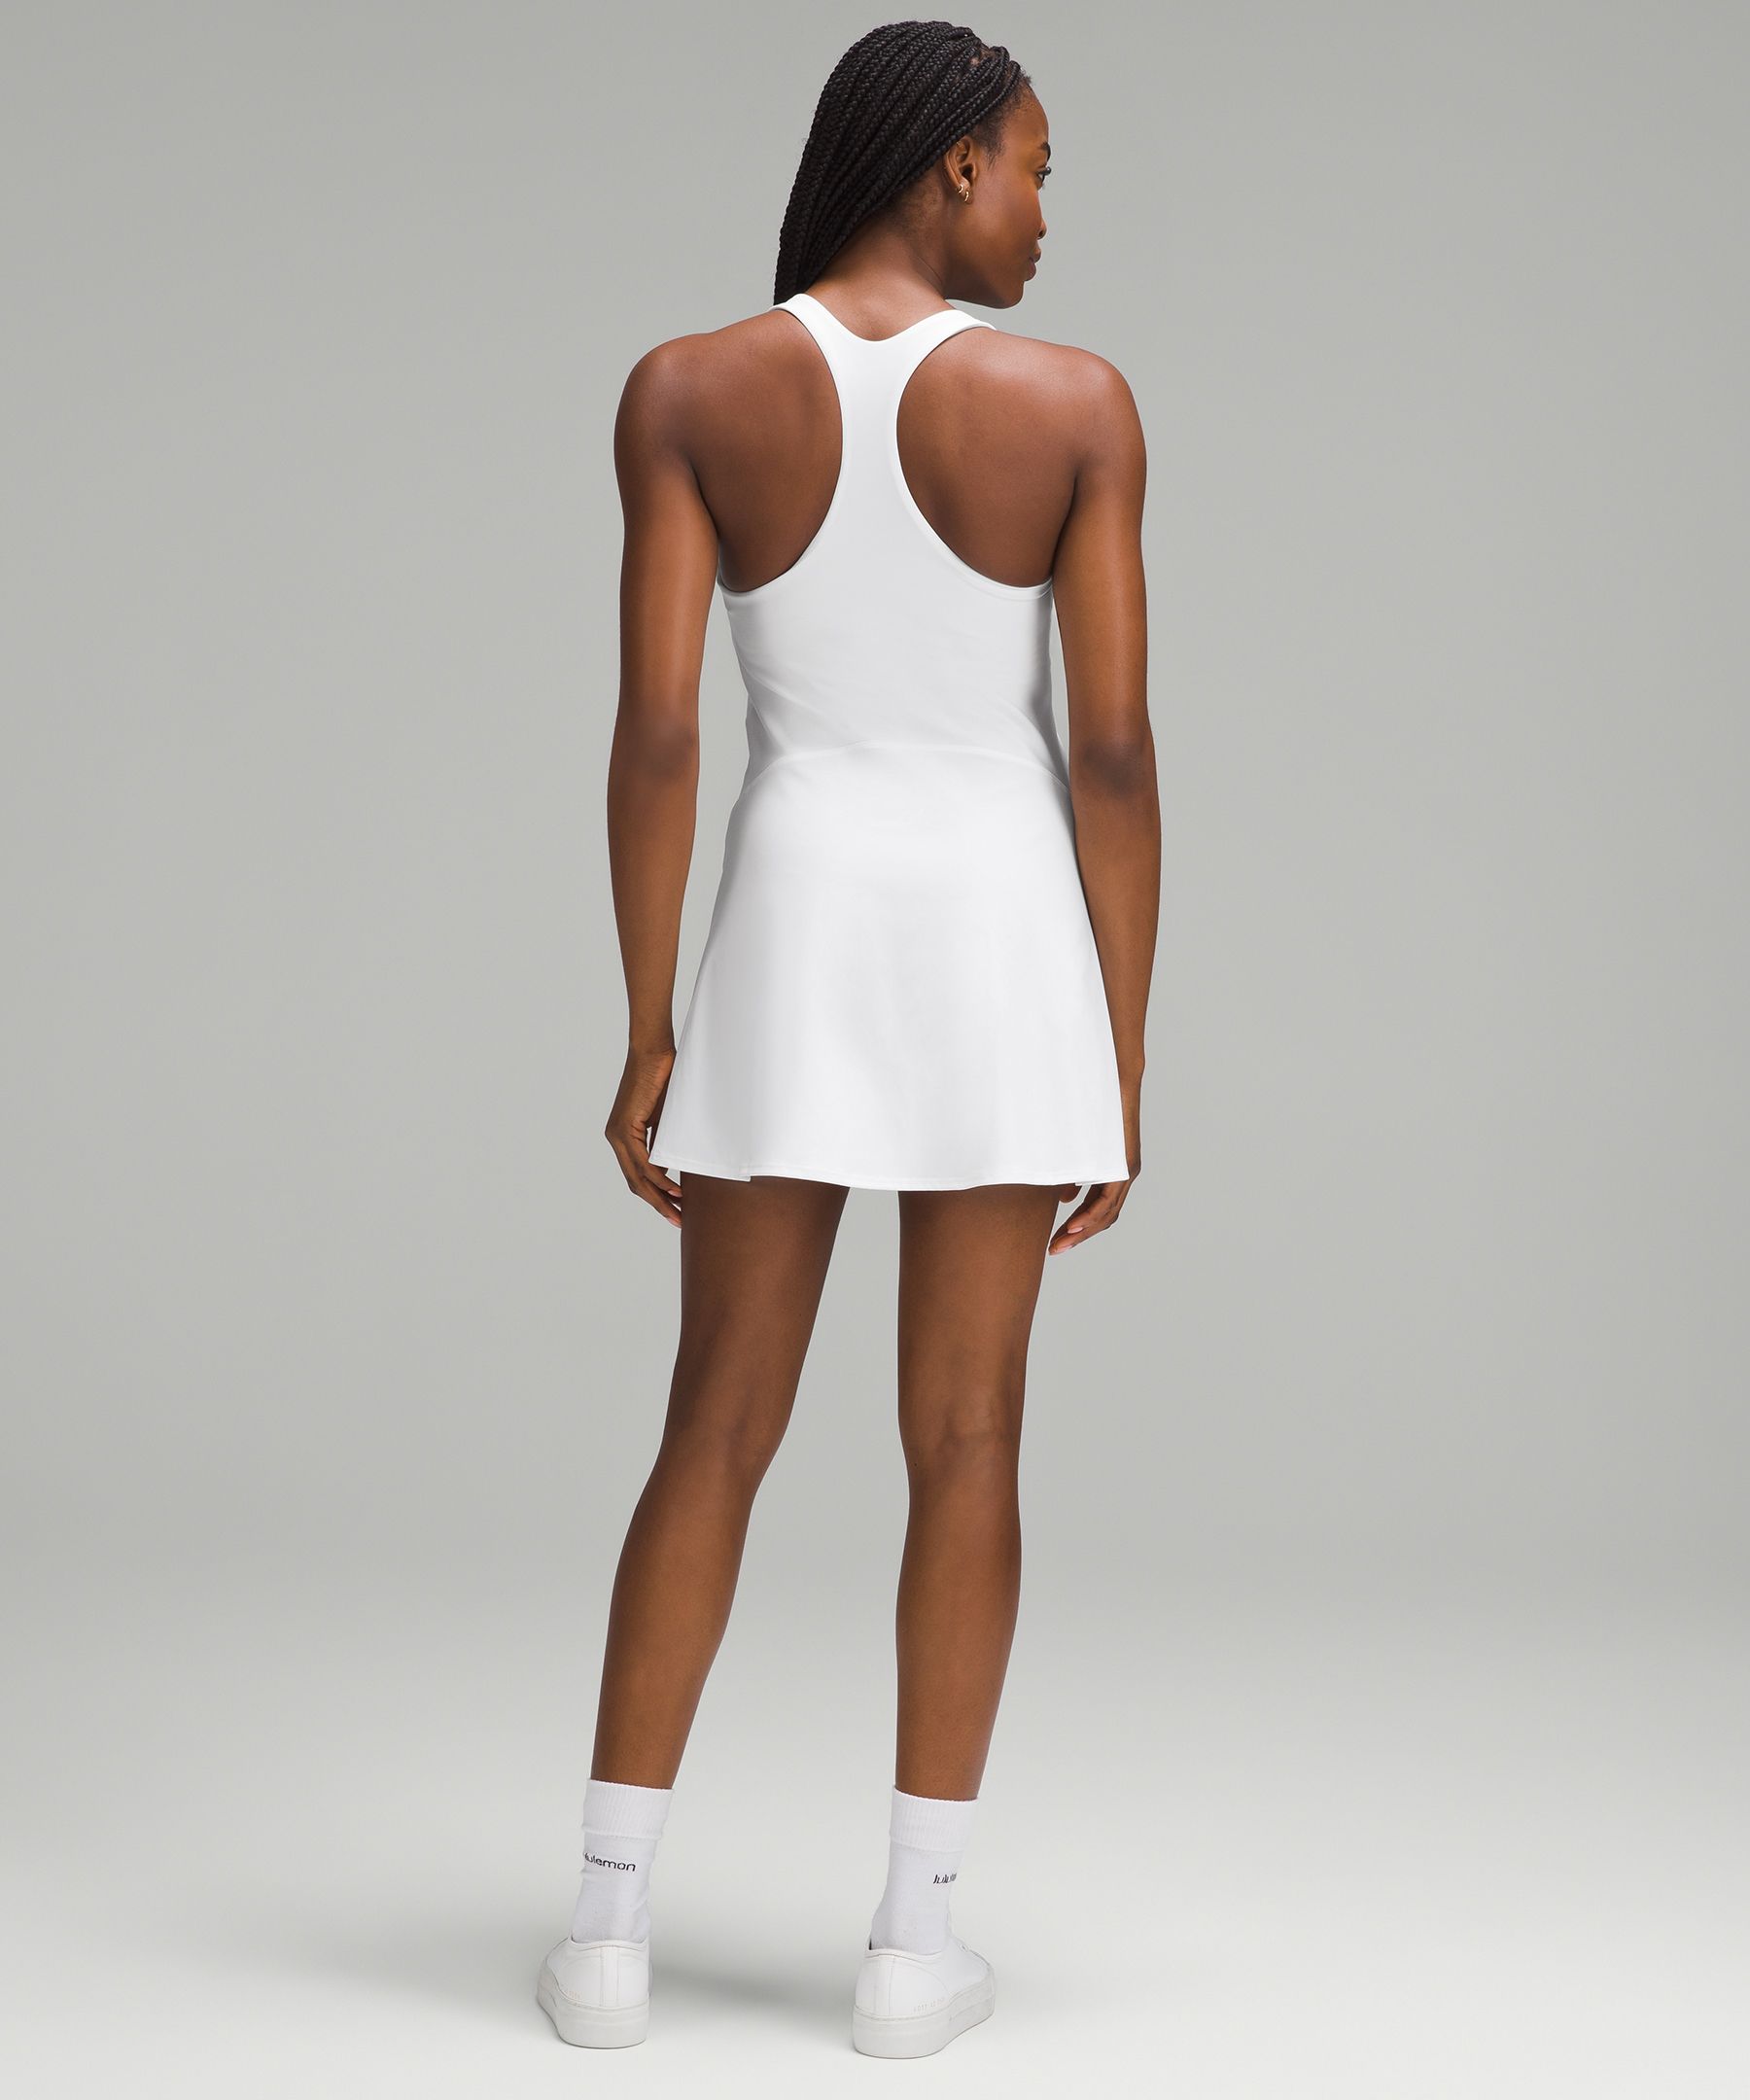 Lu Lu Yoga Lemon Algin Womens Backless Tennis Dress Sleeveless